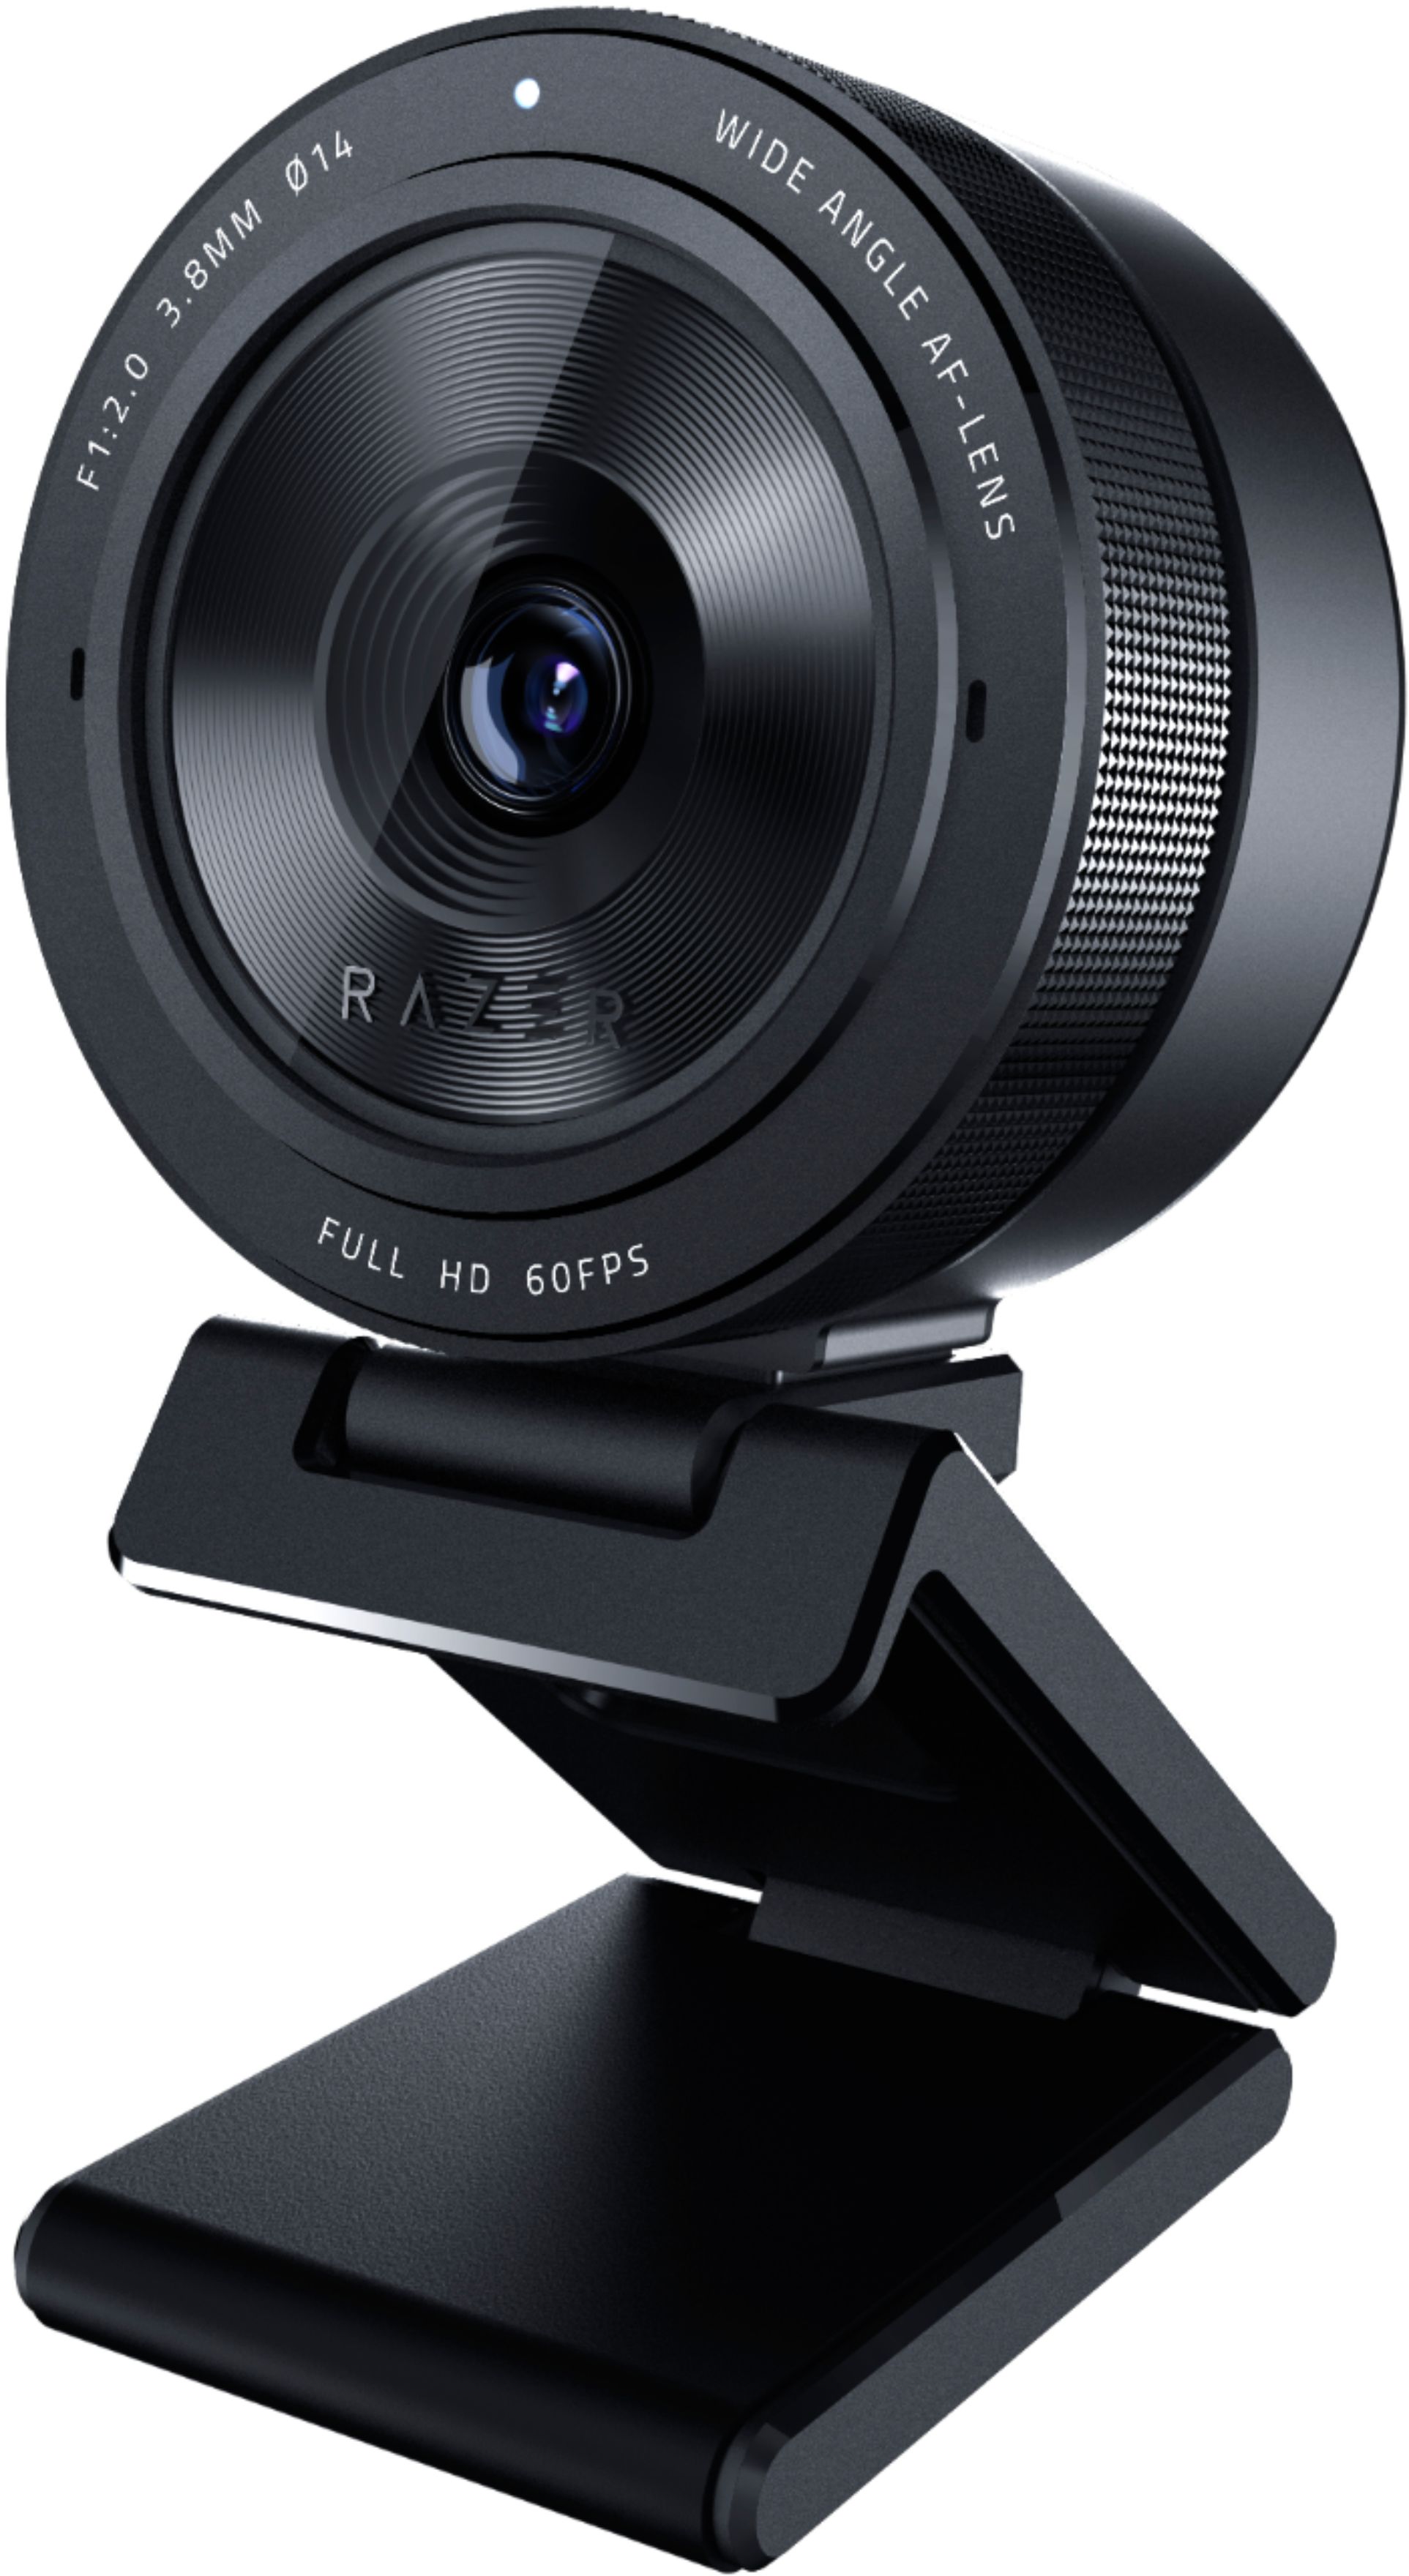 Gaming Camera for Streaming - Razer Kiyo Webcam